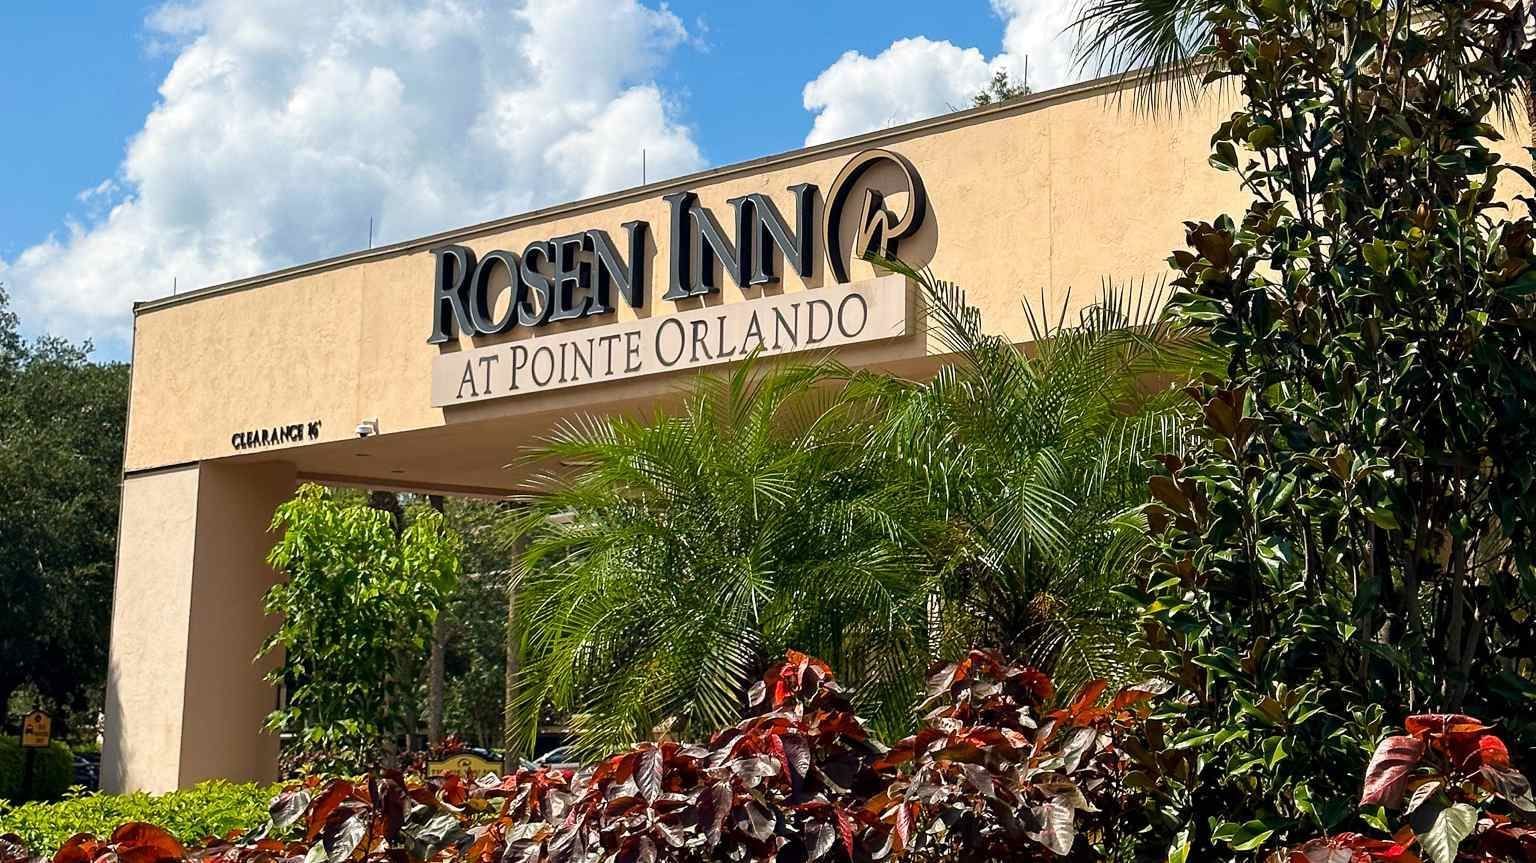 Rosen Inn at Pointe Orlando on International Drive in Orlando Florida 